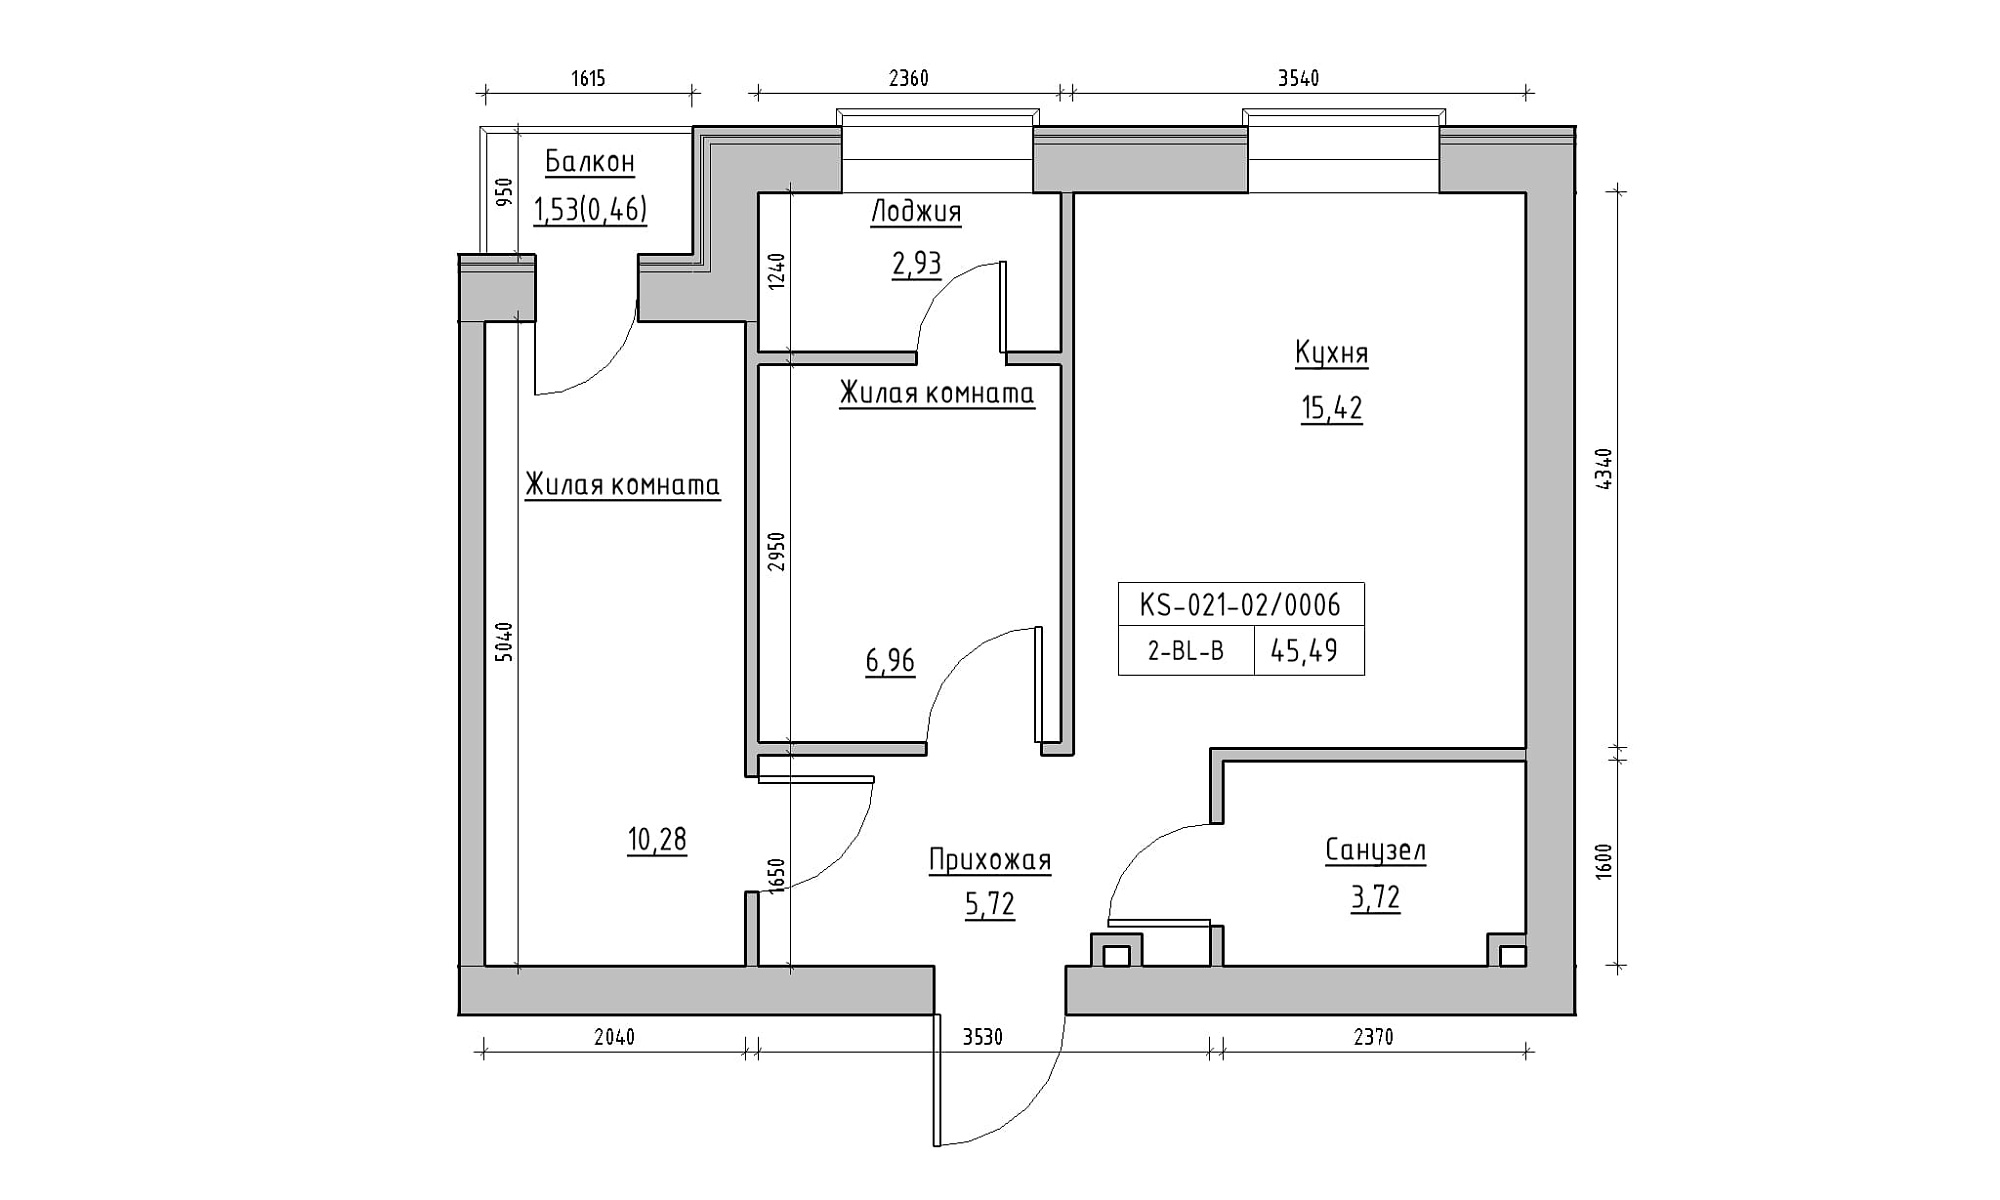 Planning 2-rm flats area 45.49m2, KS-021-02/0006.